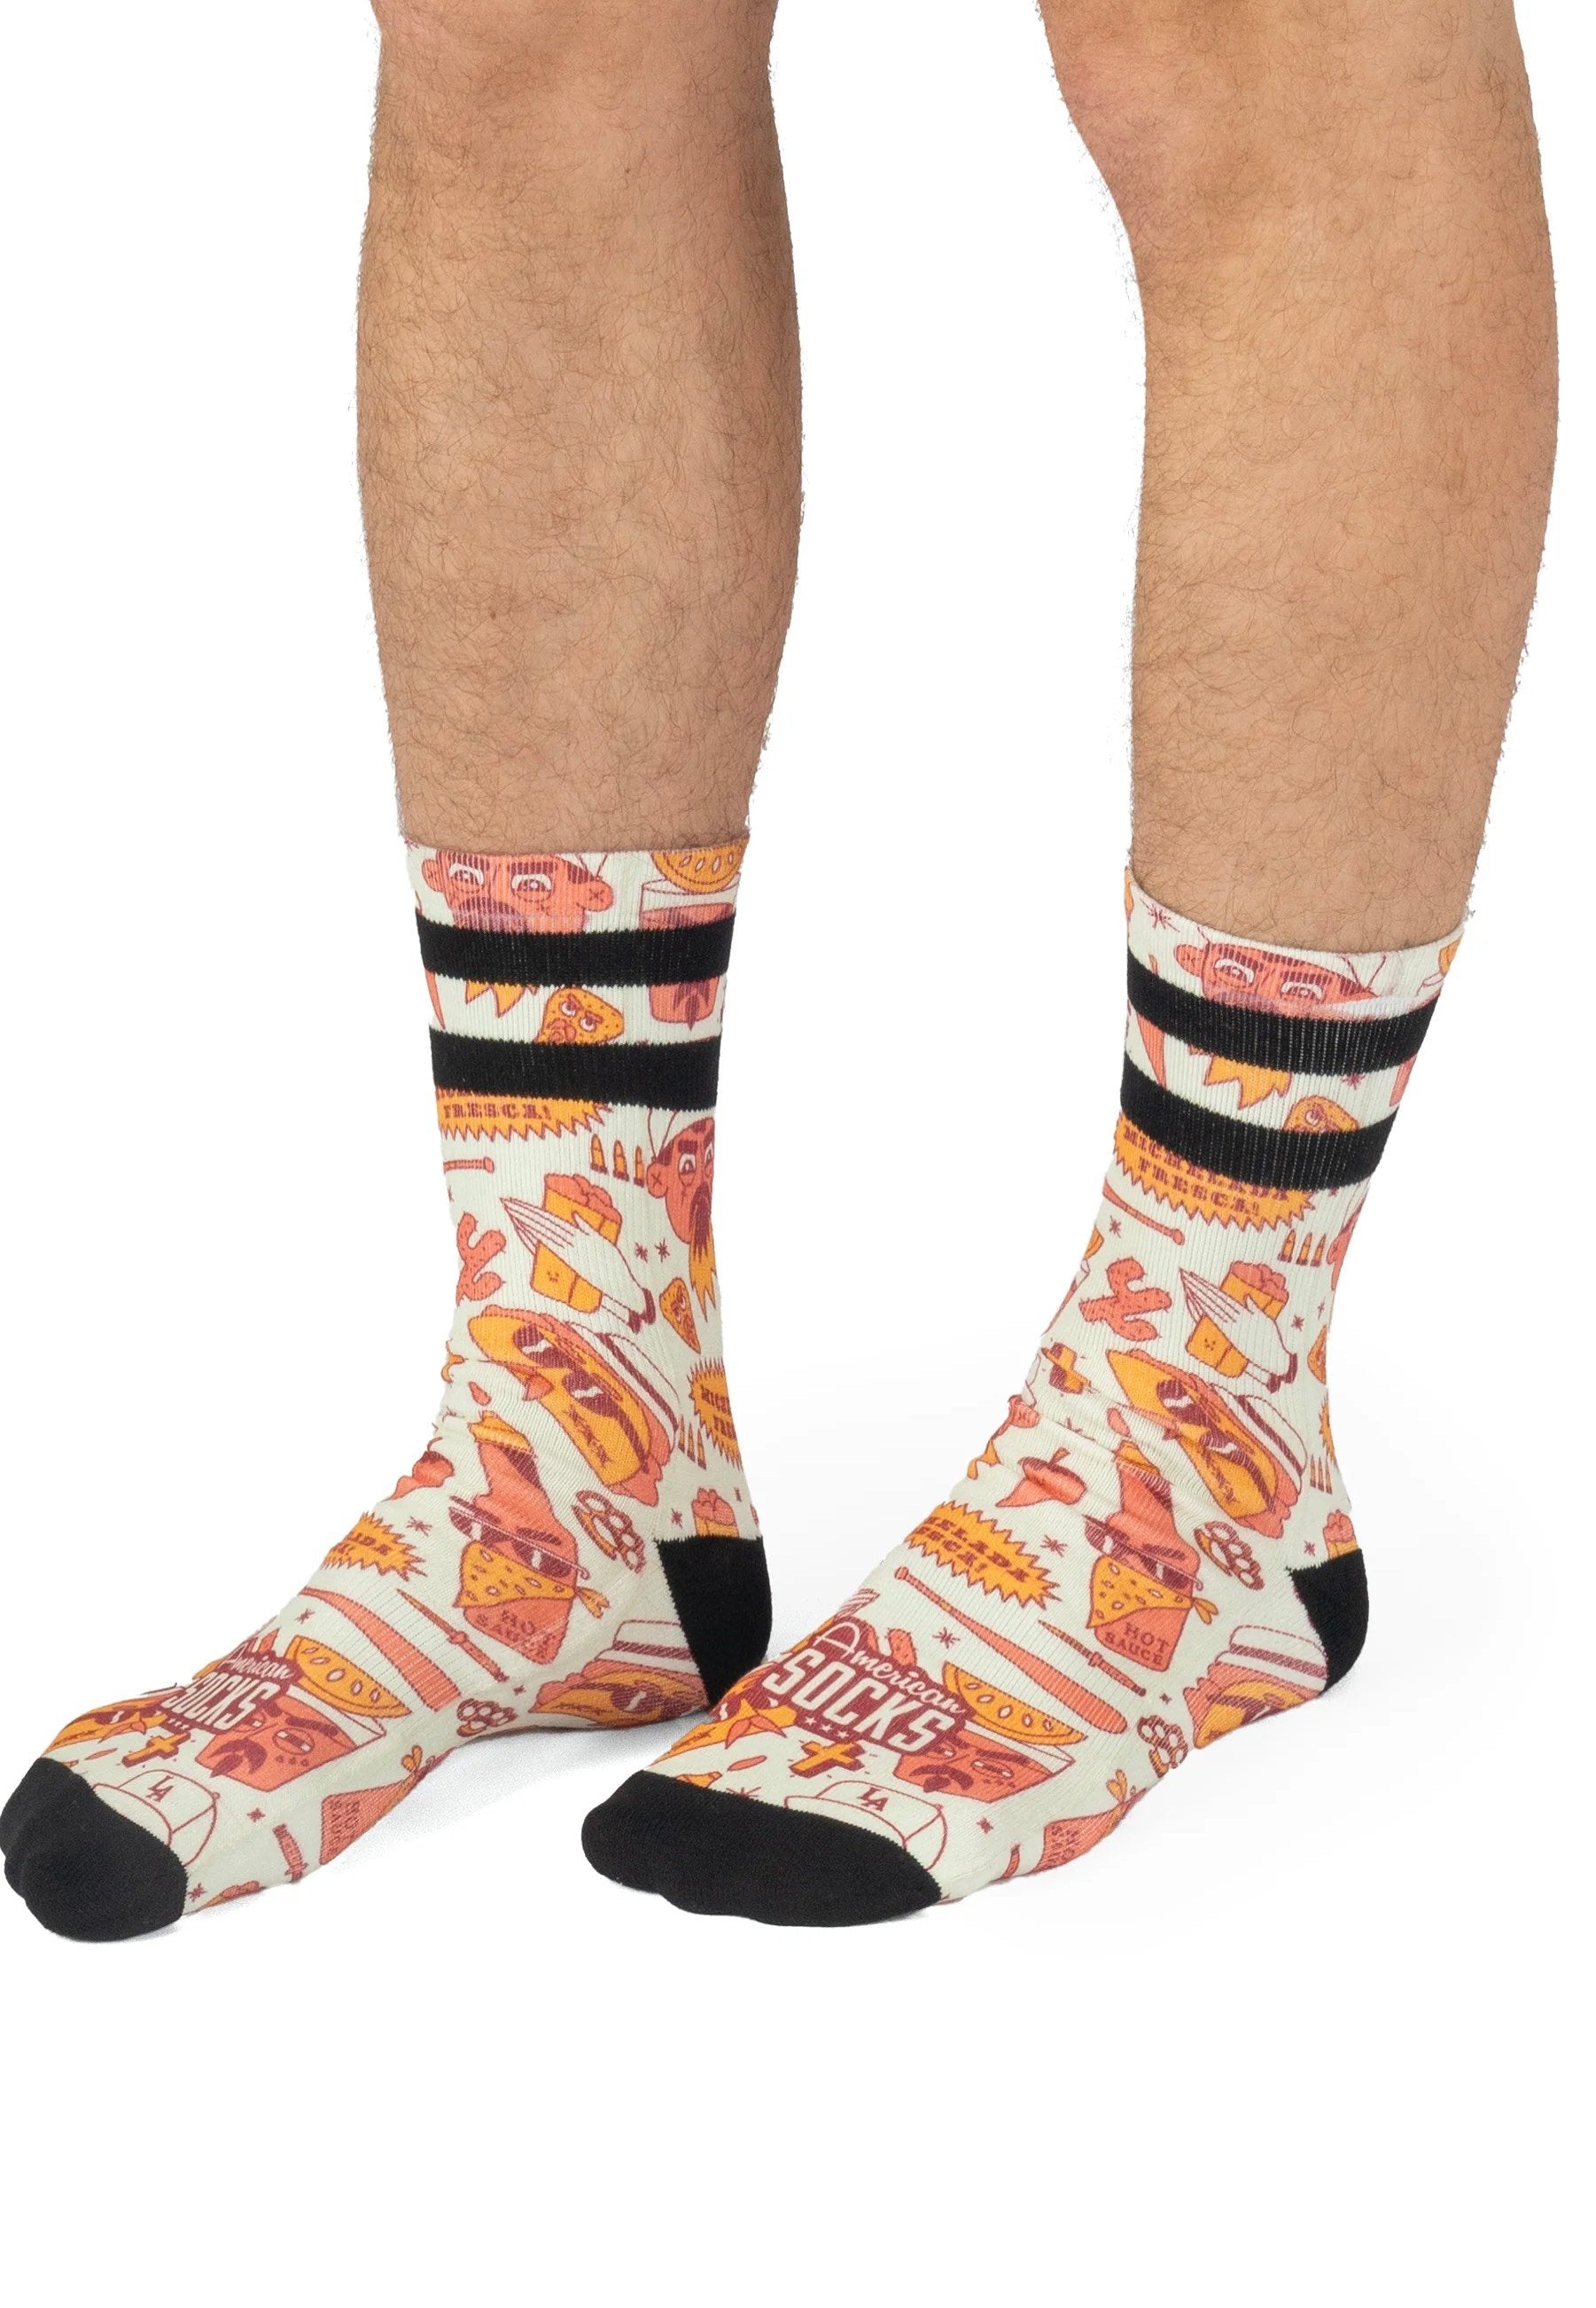 American Socks - Tacos & Vatos Mid High - Socks